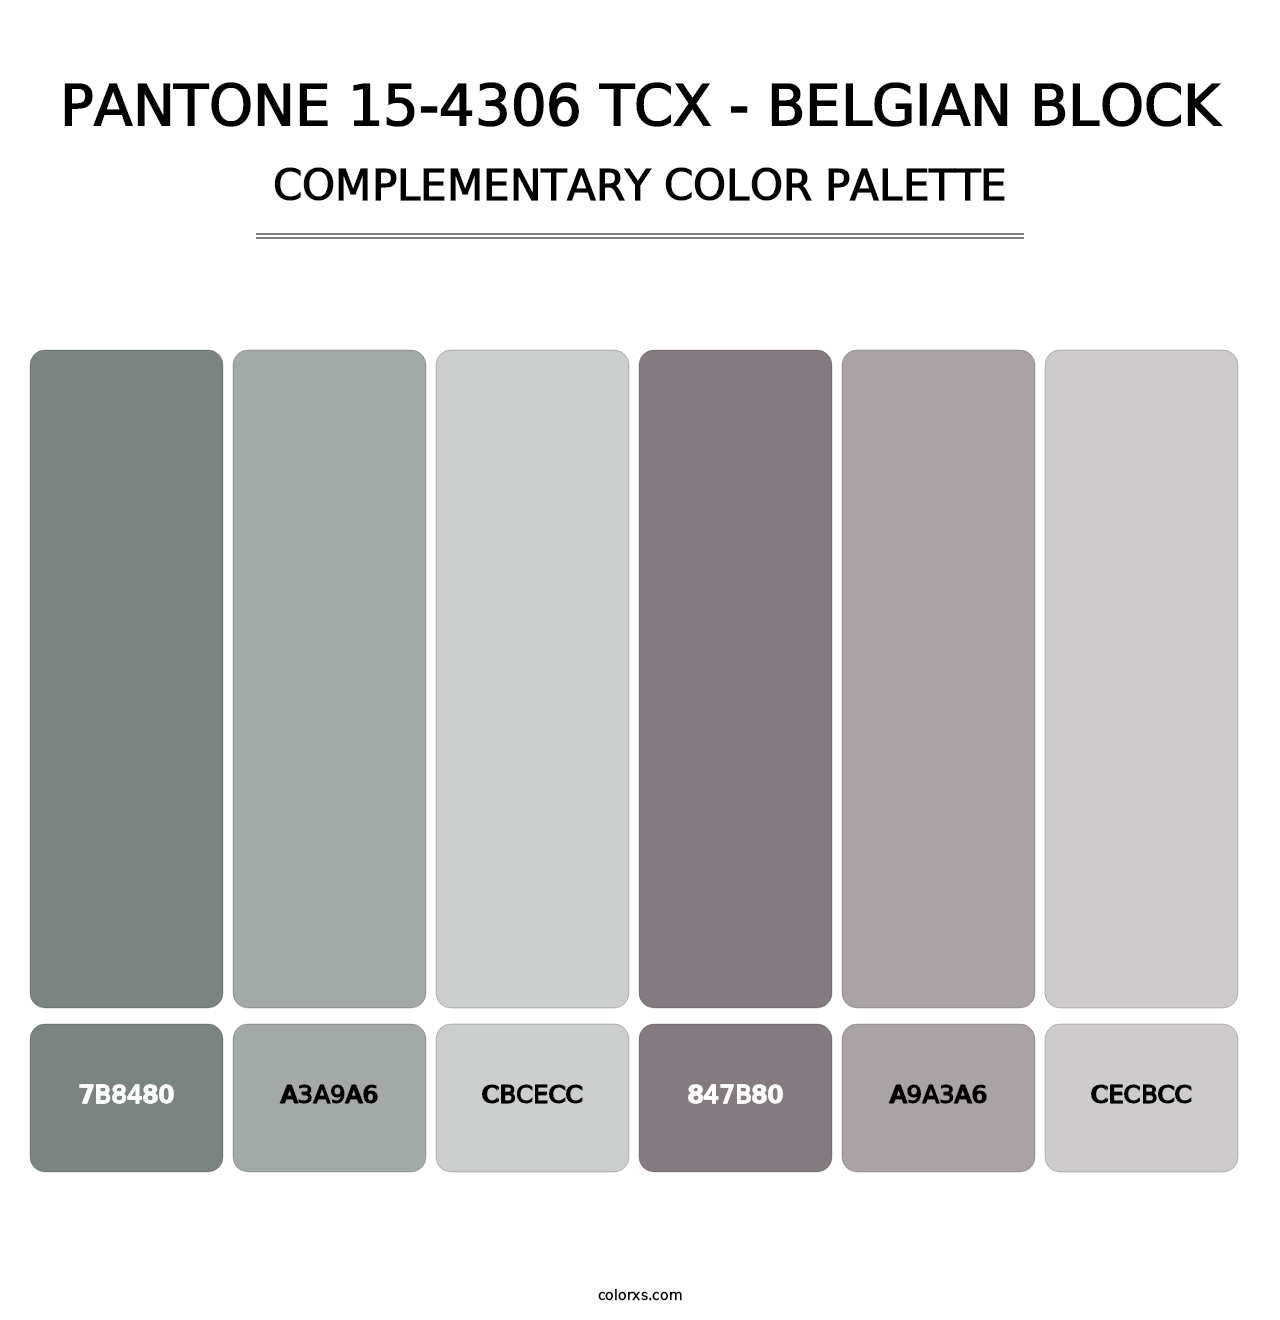 PANTONE 15-4306 TCX - Belgian Block - Complementary Color Palette